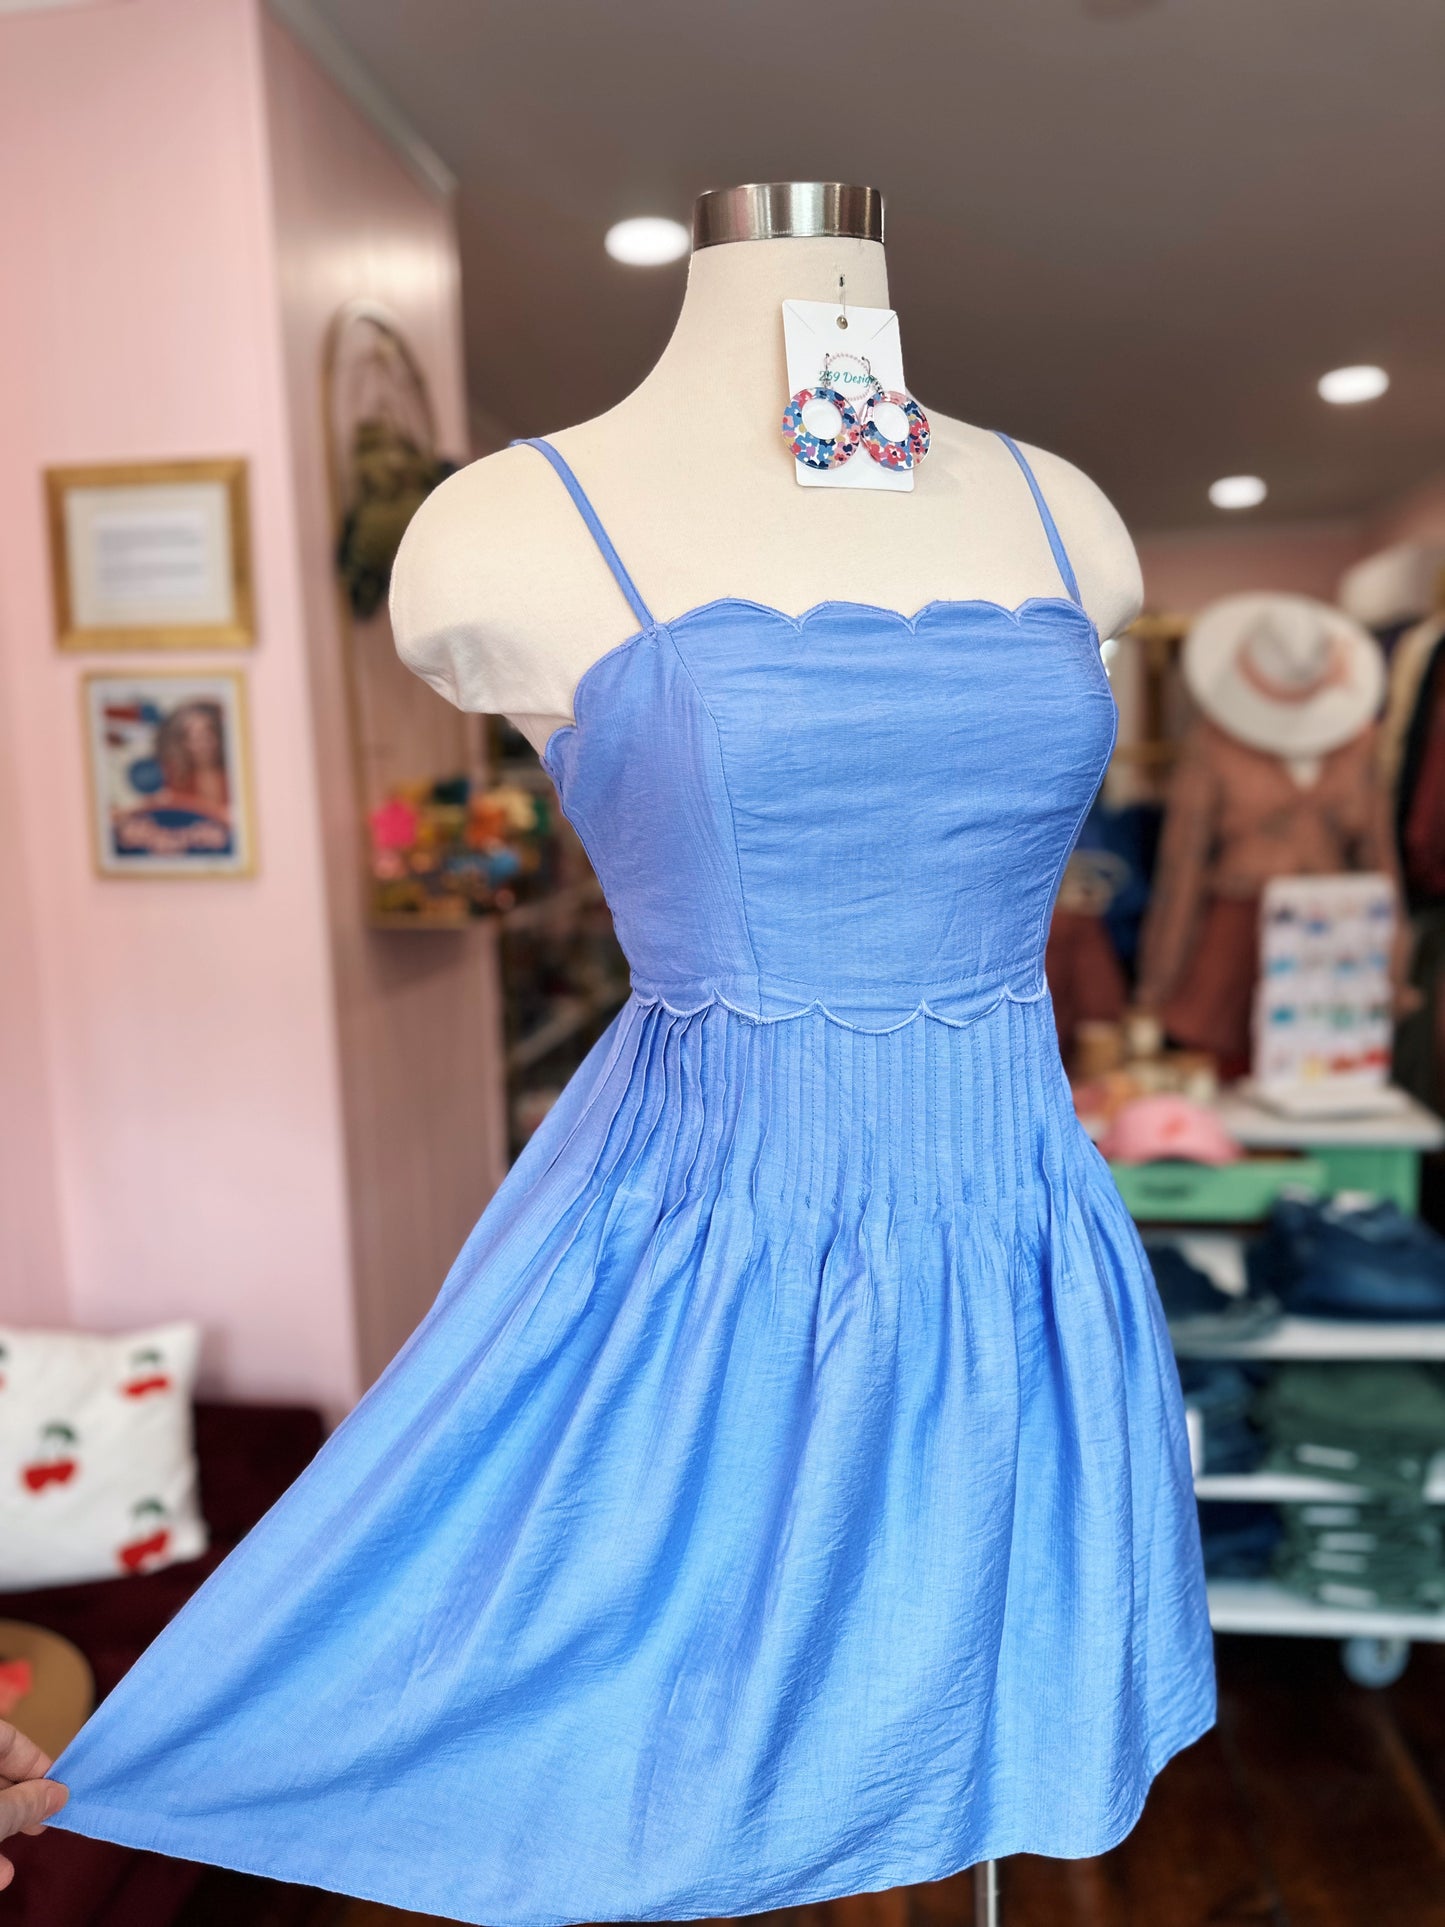 Skyline Scallop Dress